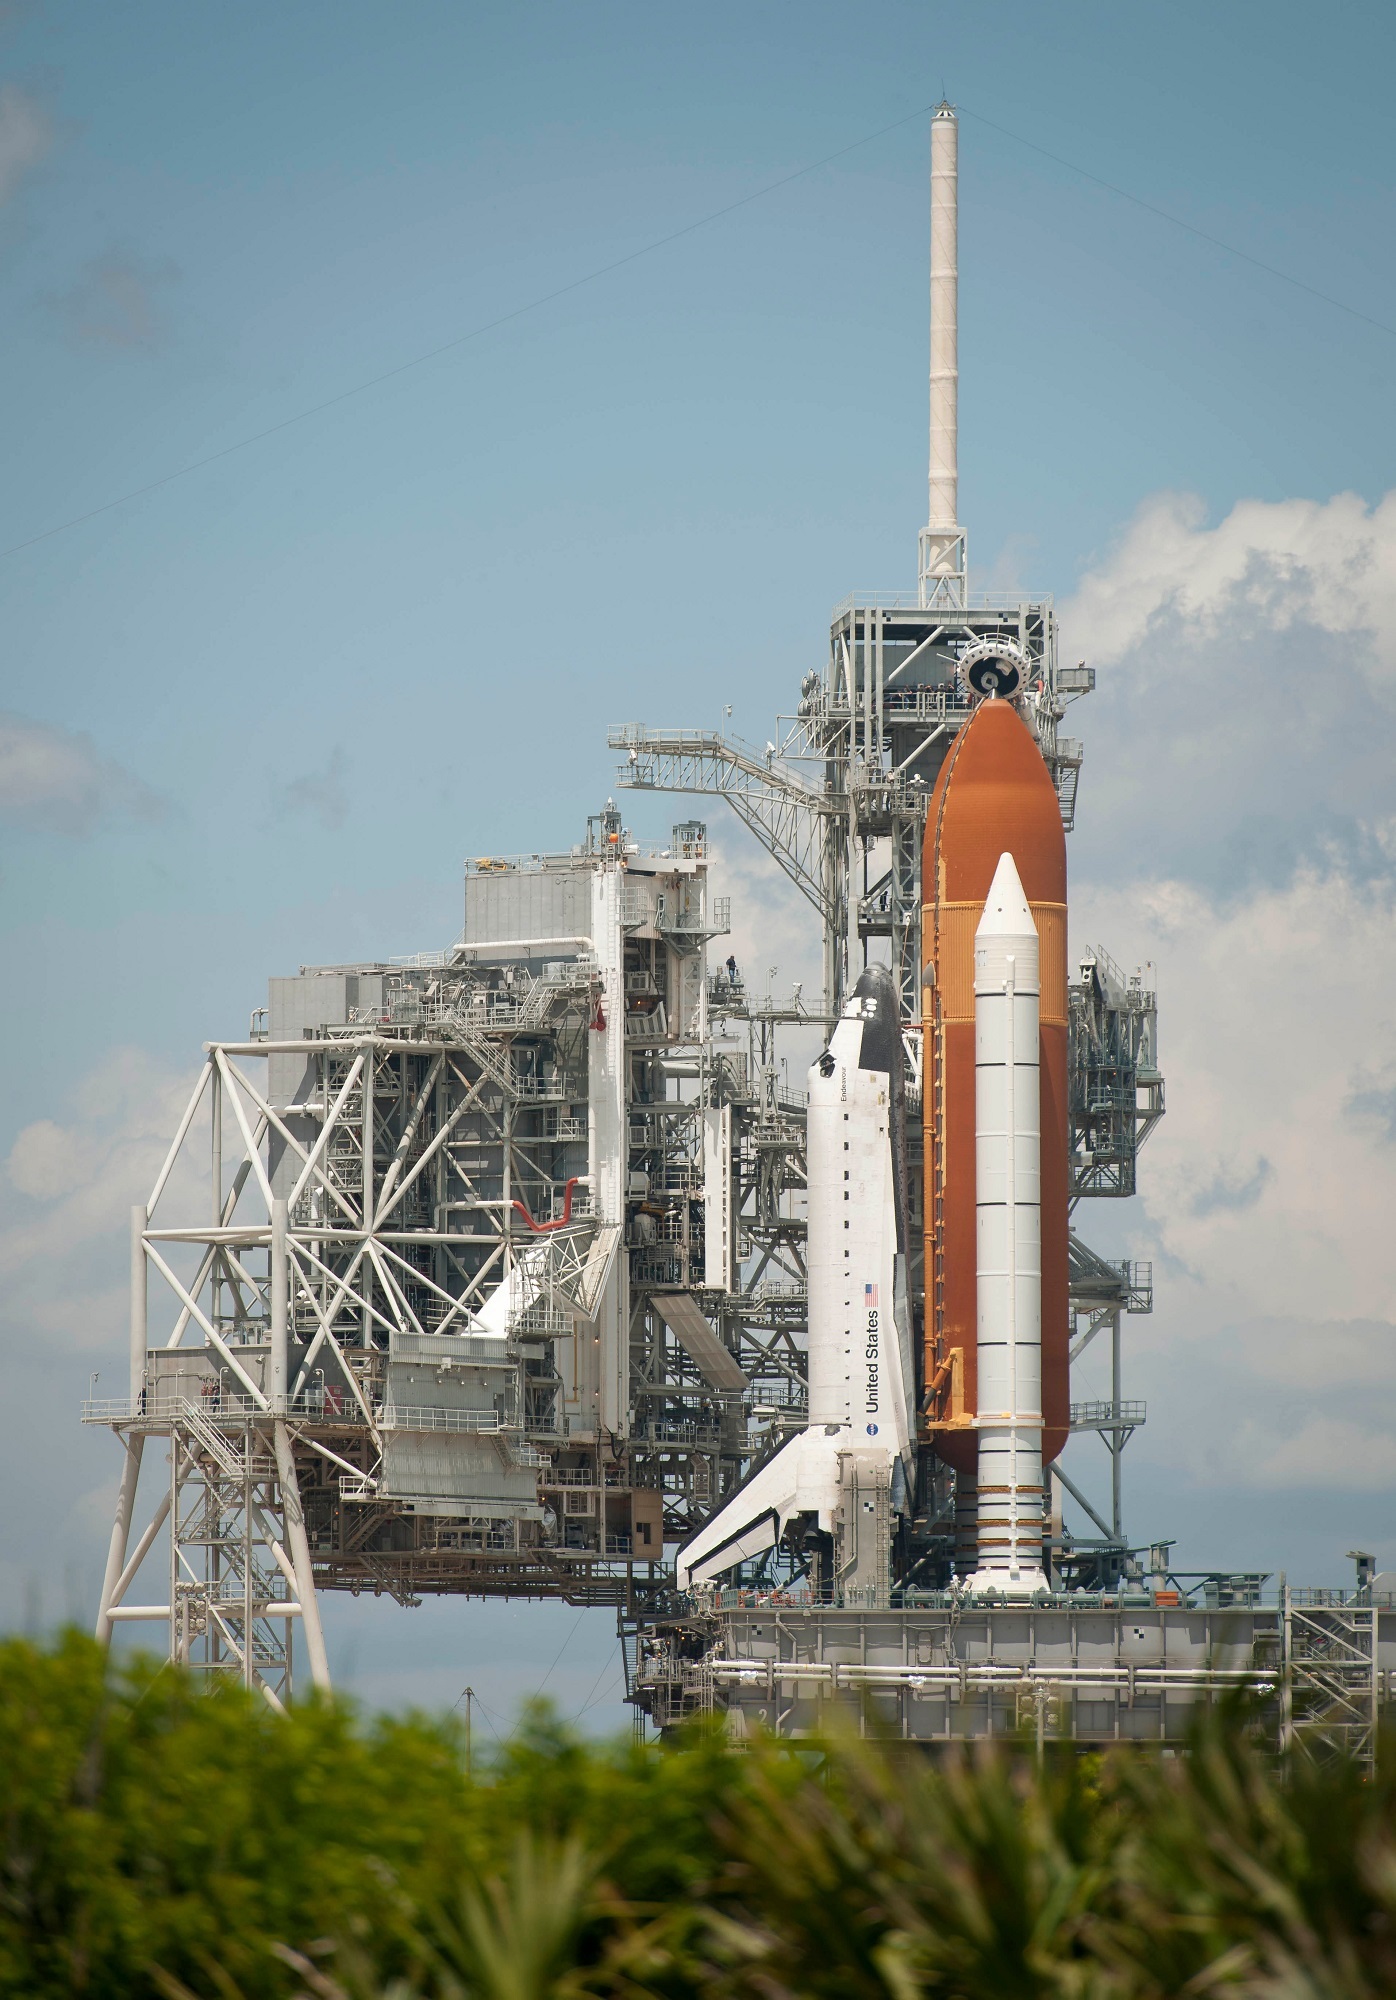 Endeavor Space Shuttle, Endeavor, Lightning, Lunar, Lunch, HQ Photo